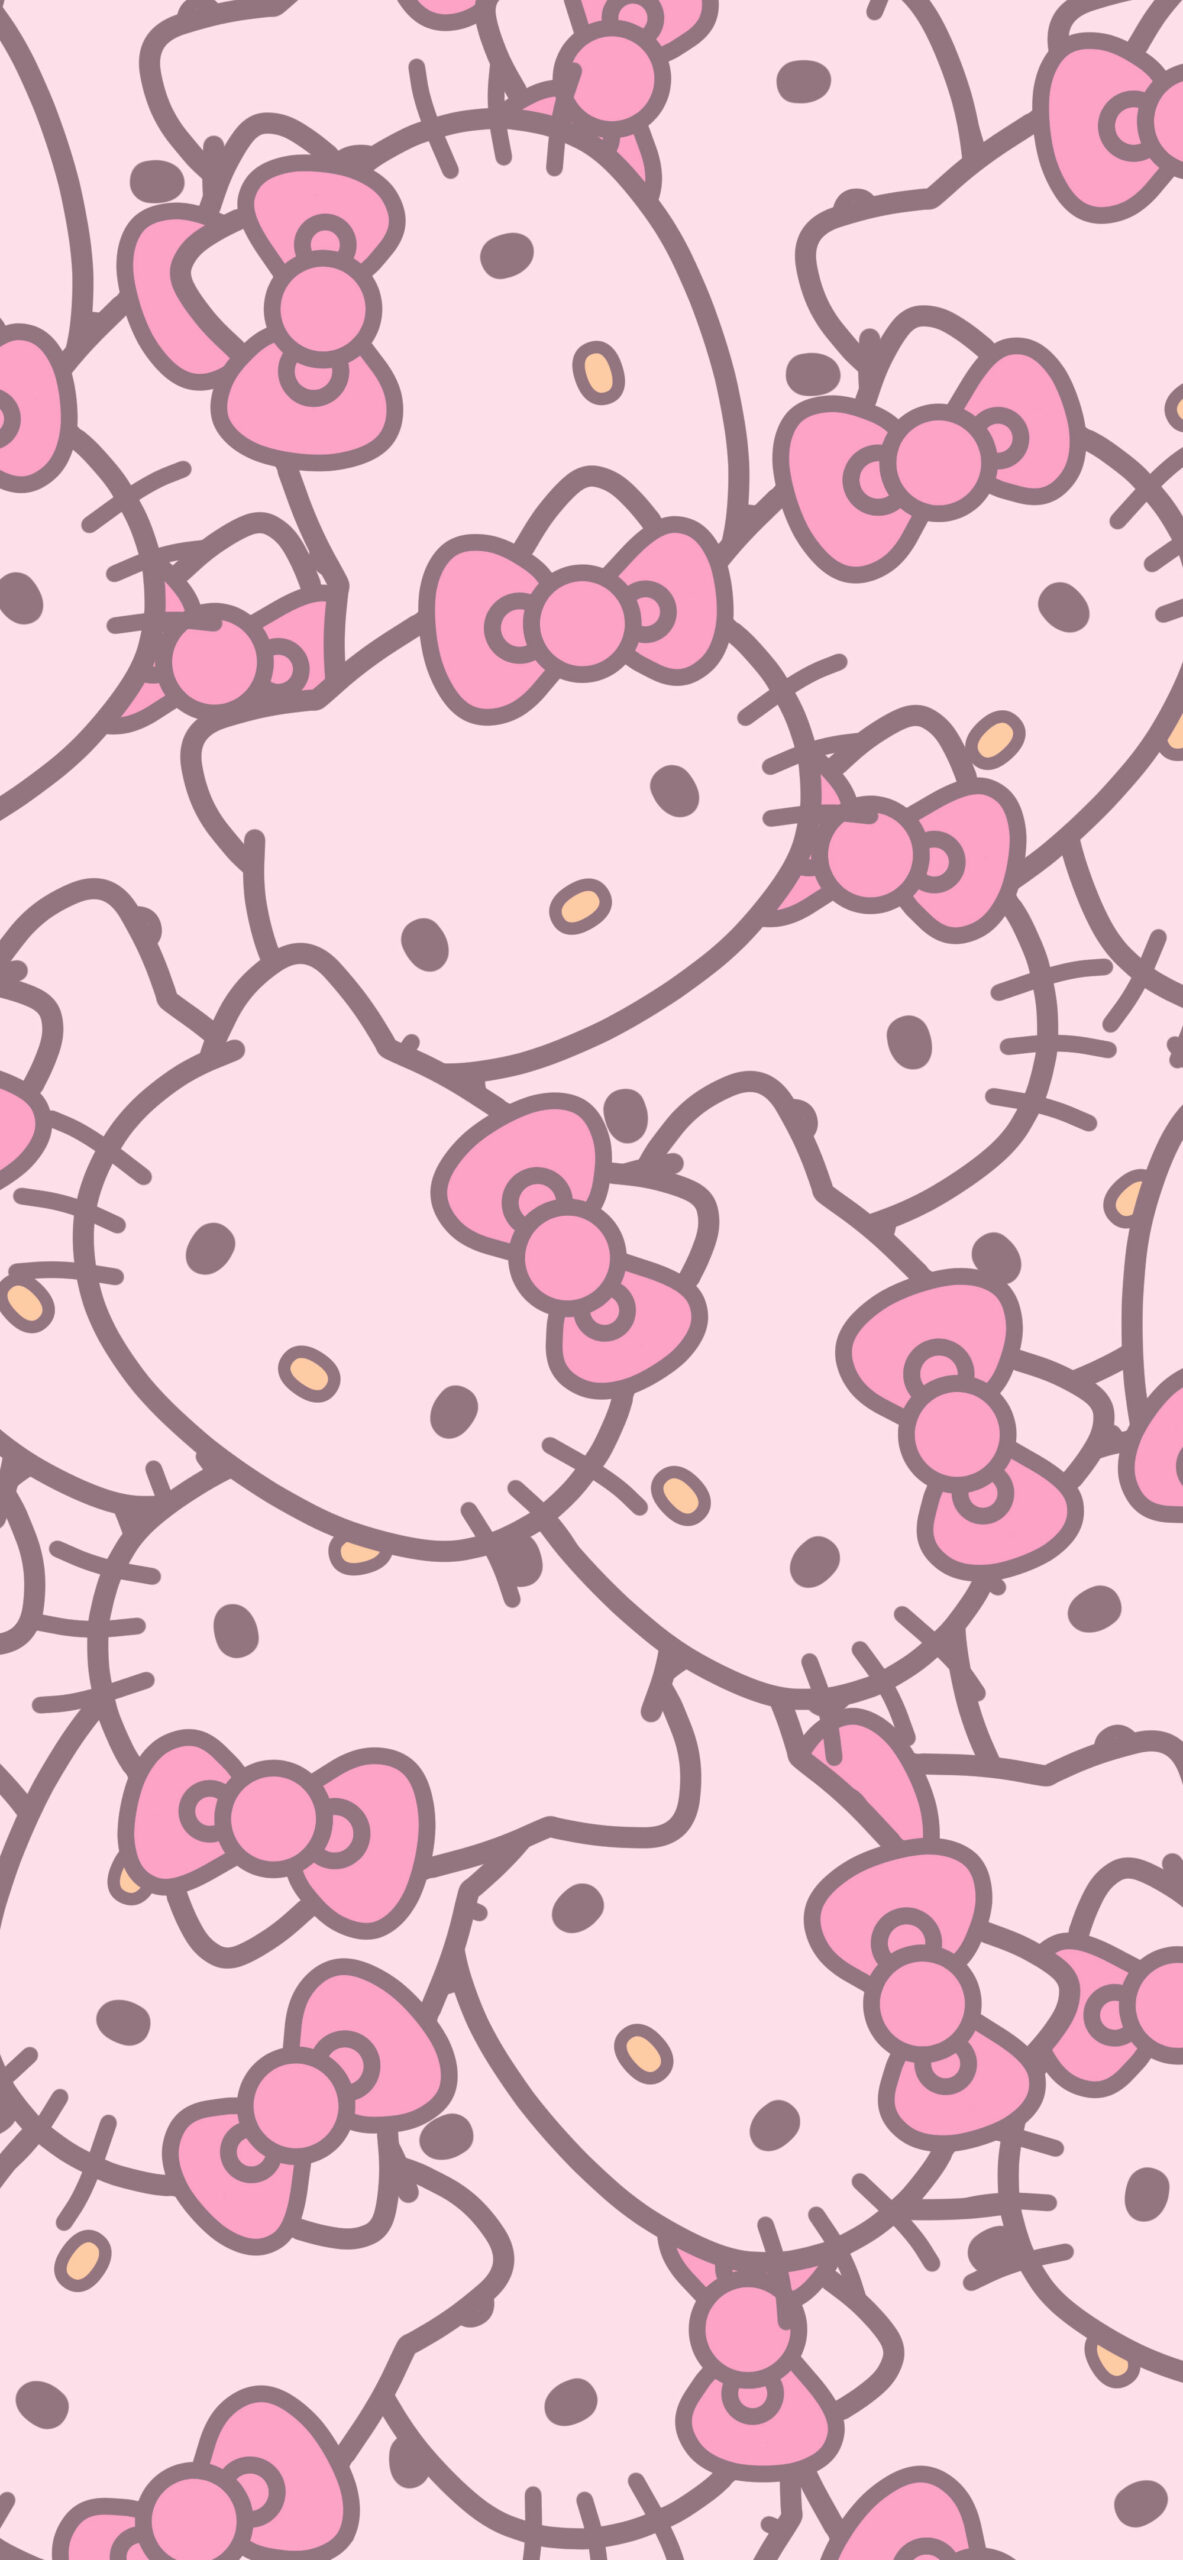 hello kitty face pattern background